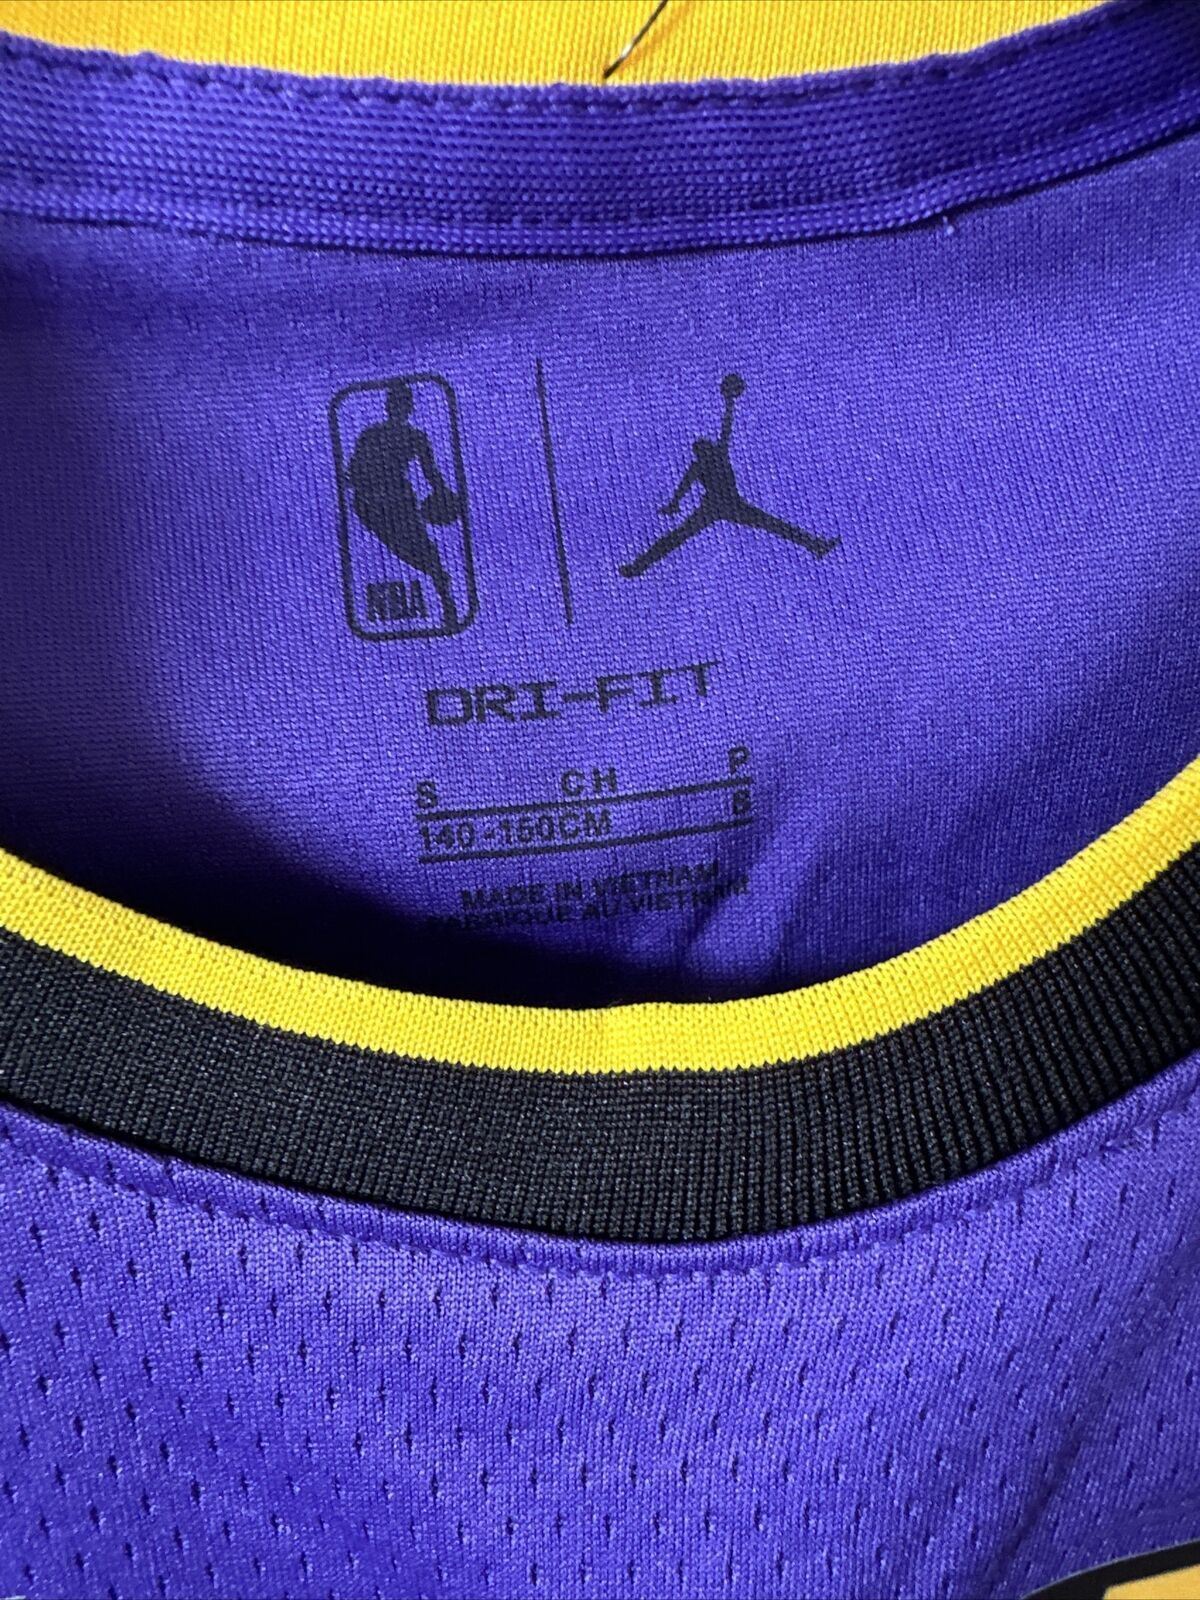 Nike NBA LA Lakers Statement Edition Jersey HARTY 9 Youth 8-10 Years